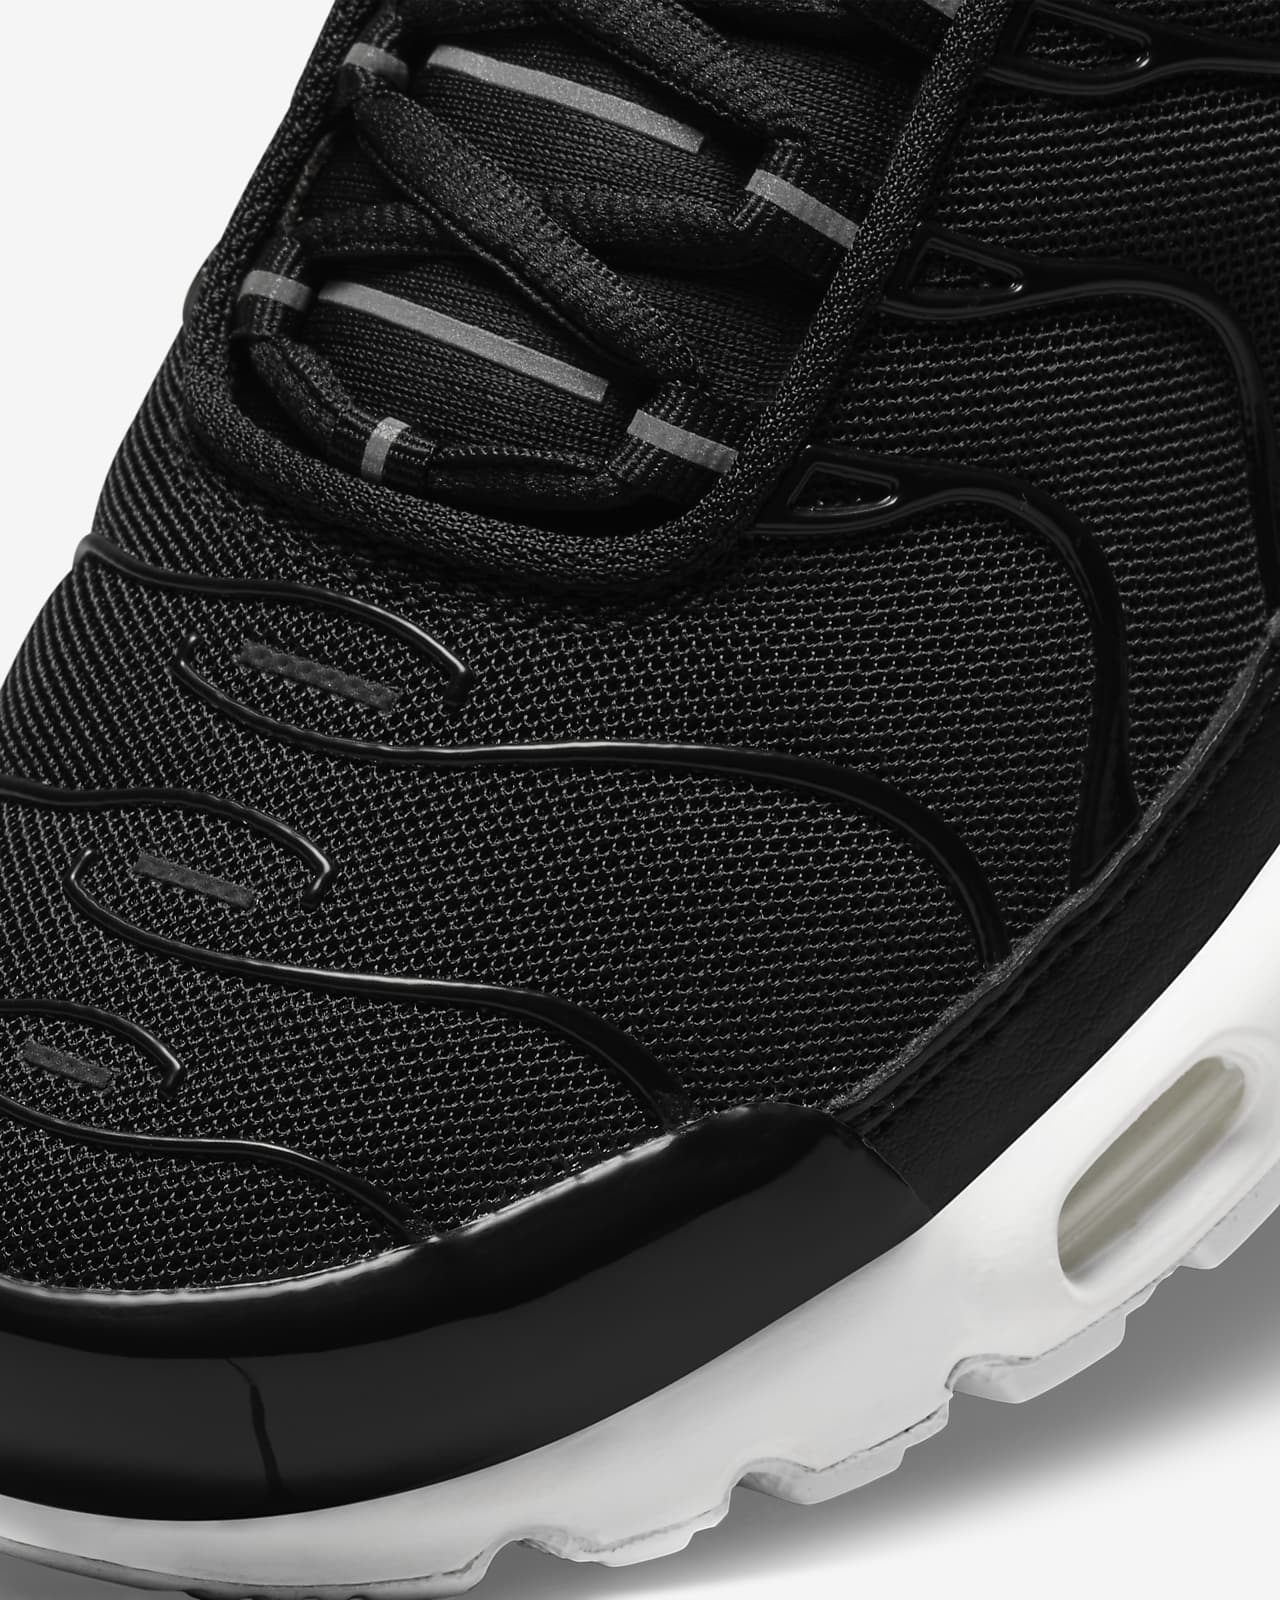 Nike Air Max Plus Women's Shoes ساعة بلاك دايموند